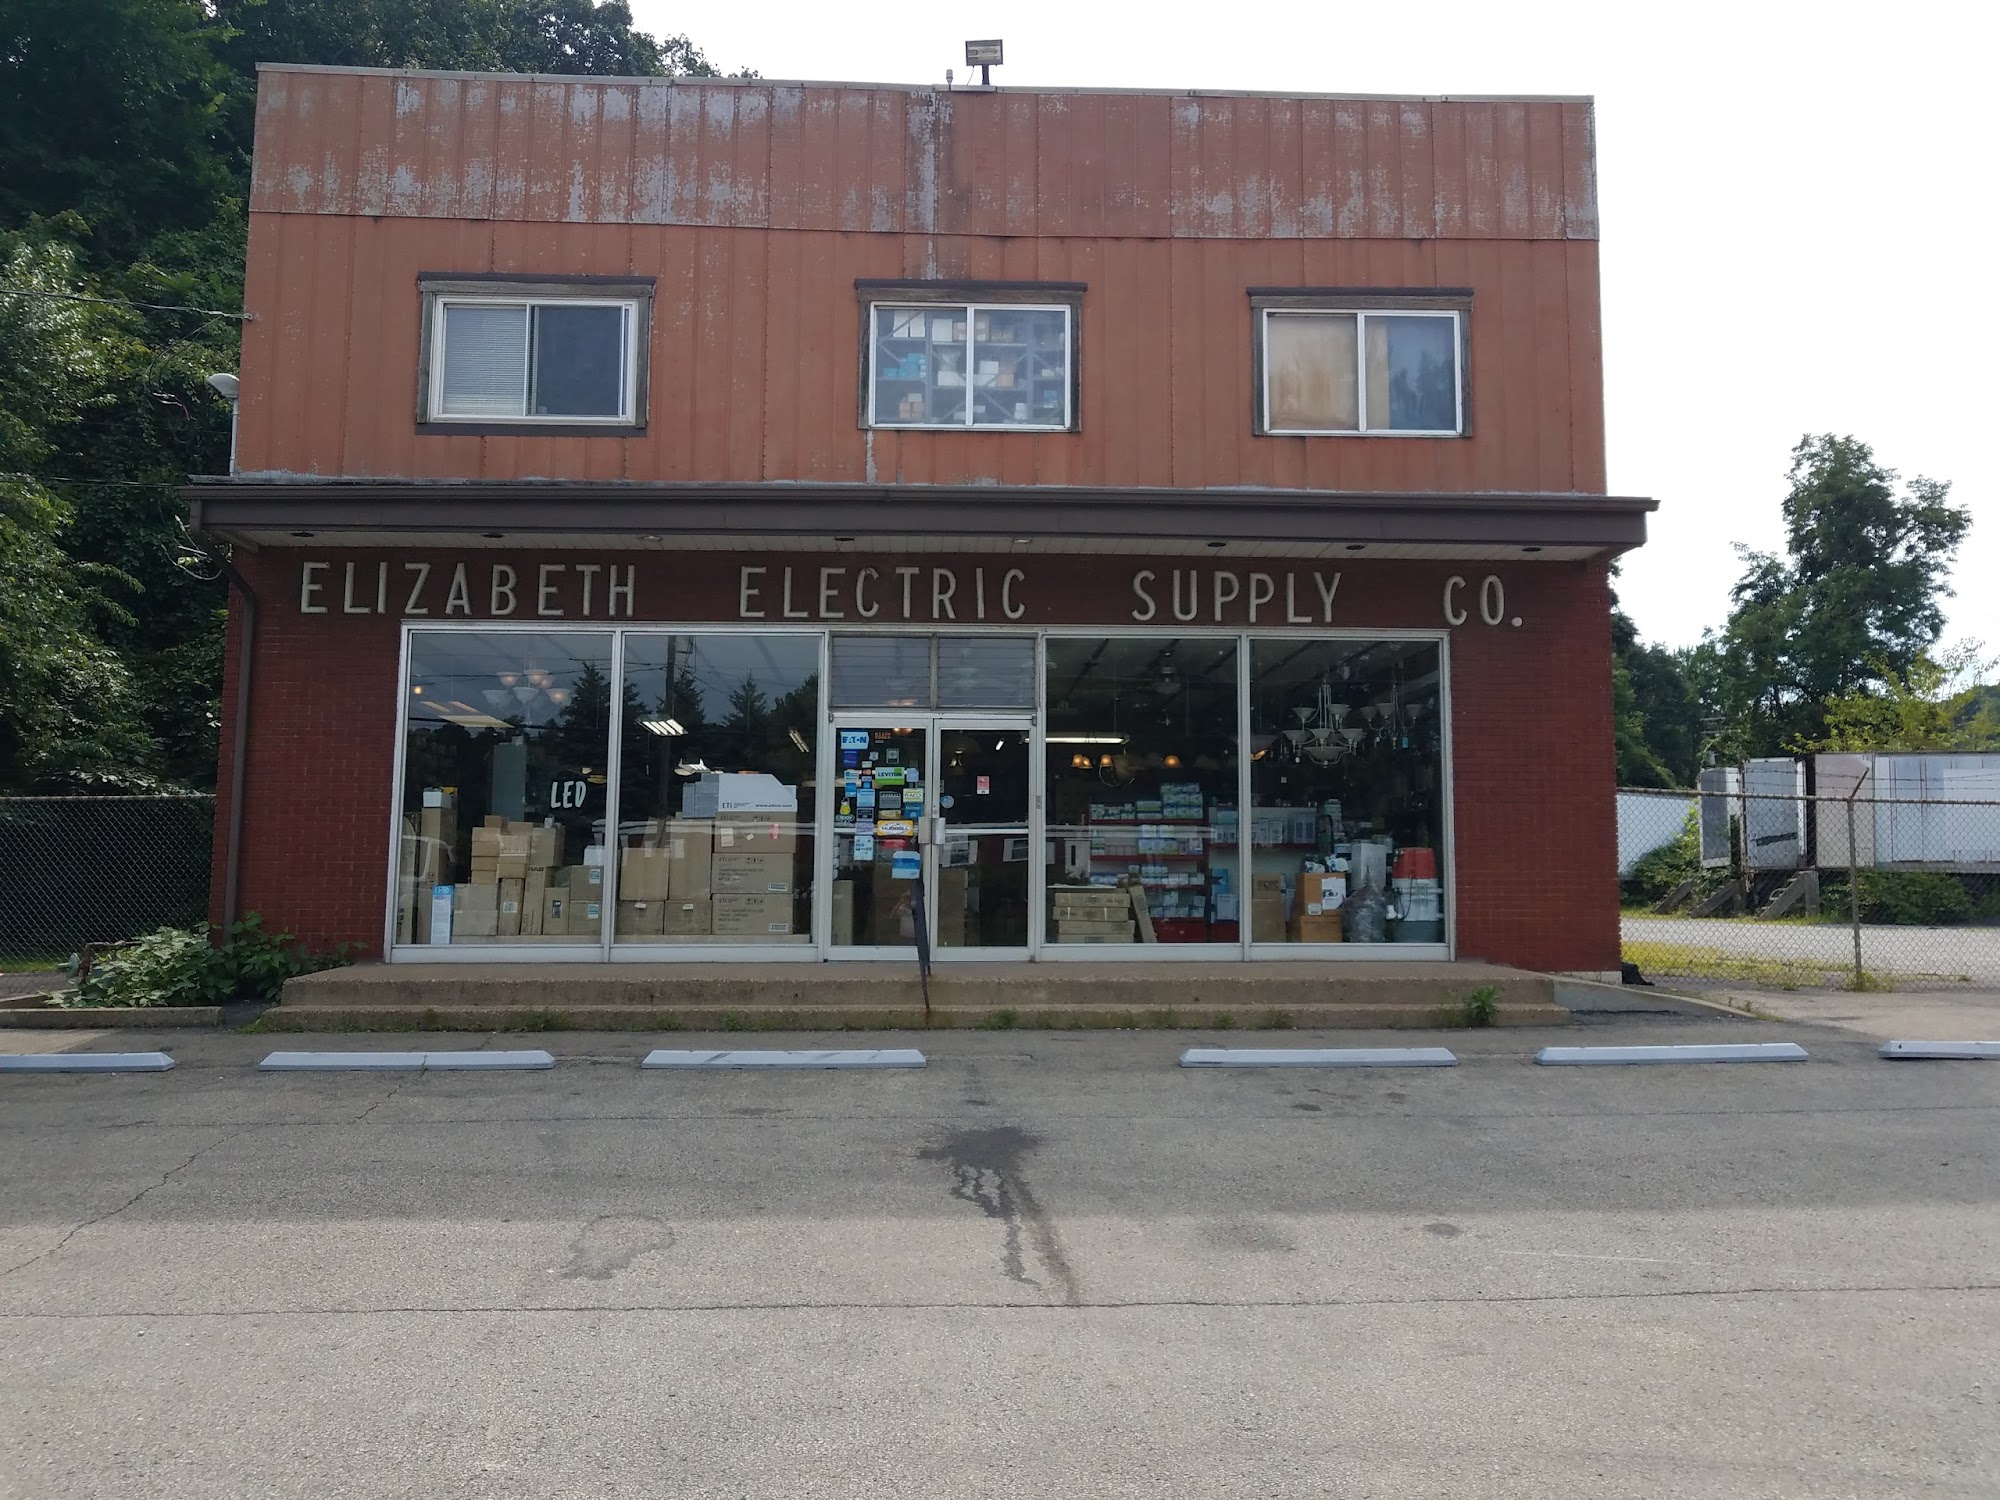 Elizabeth Electric Supply Co 2020 Lincoln Blvd, Elizabeth Pennsylvania 15037